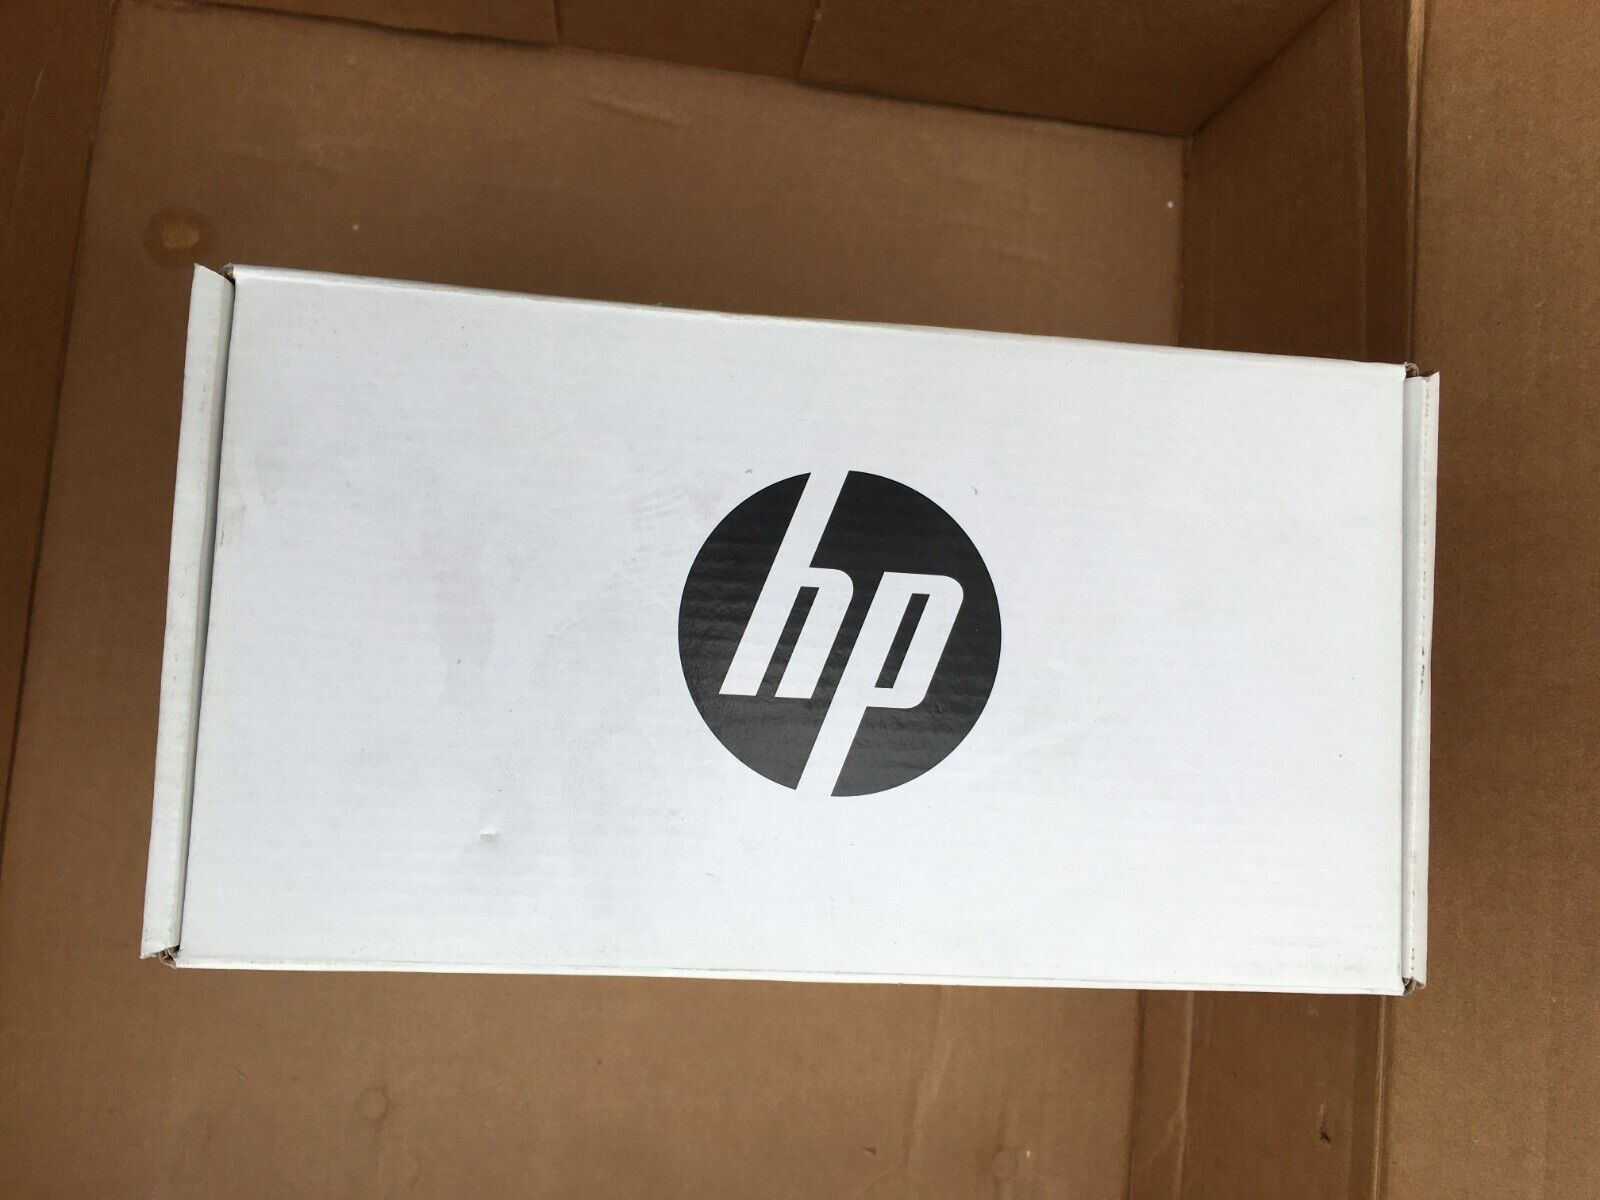 HP J8021A Jetdirect EW2500 802.11g Print Server new in box